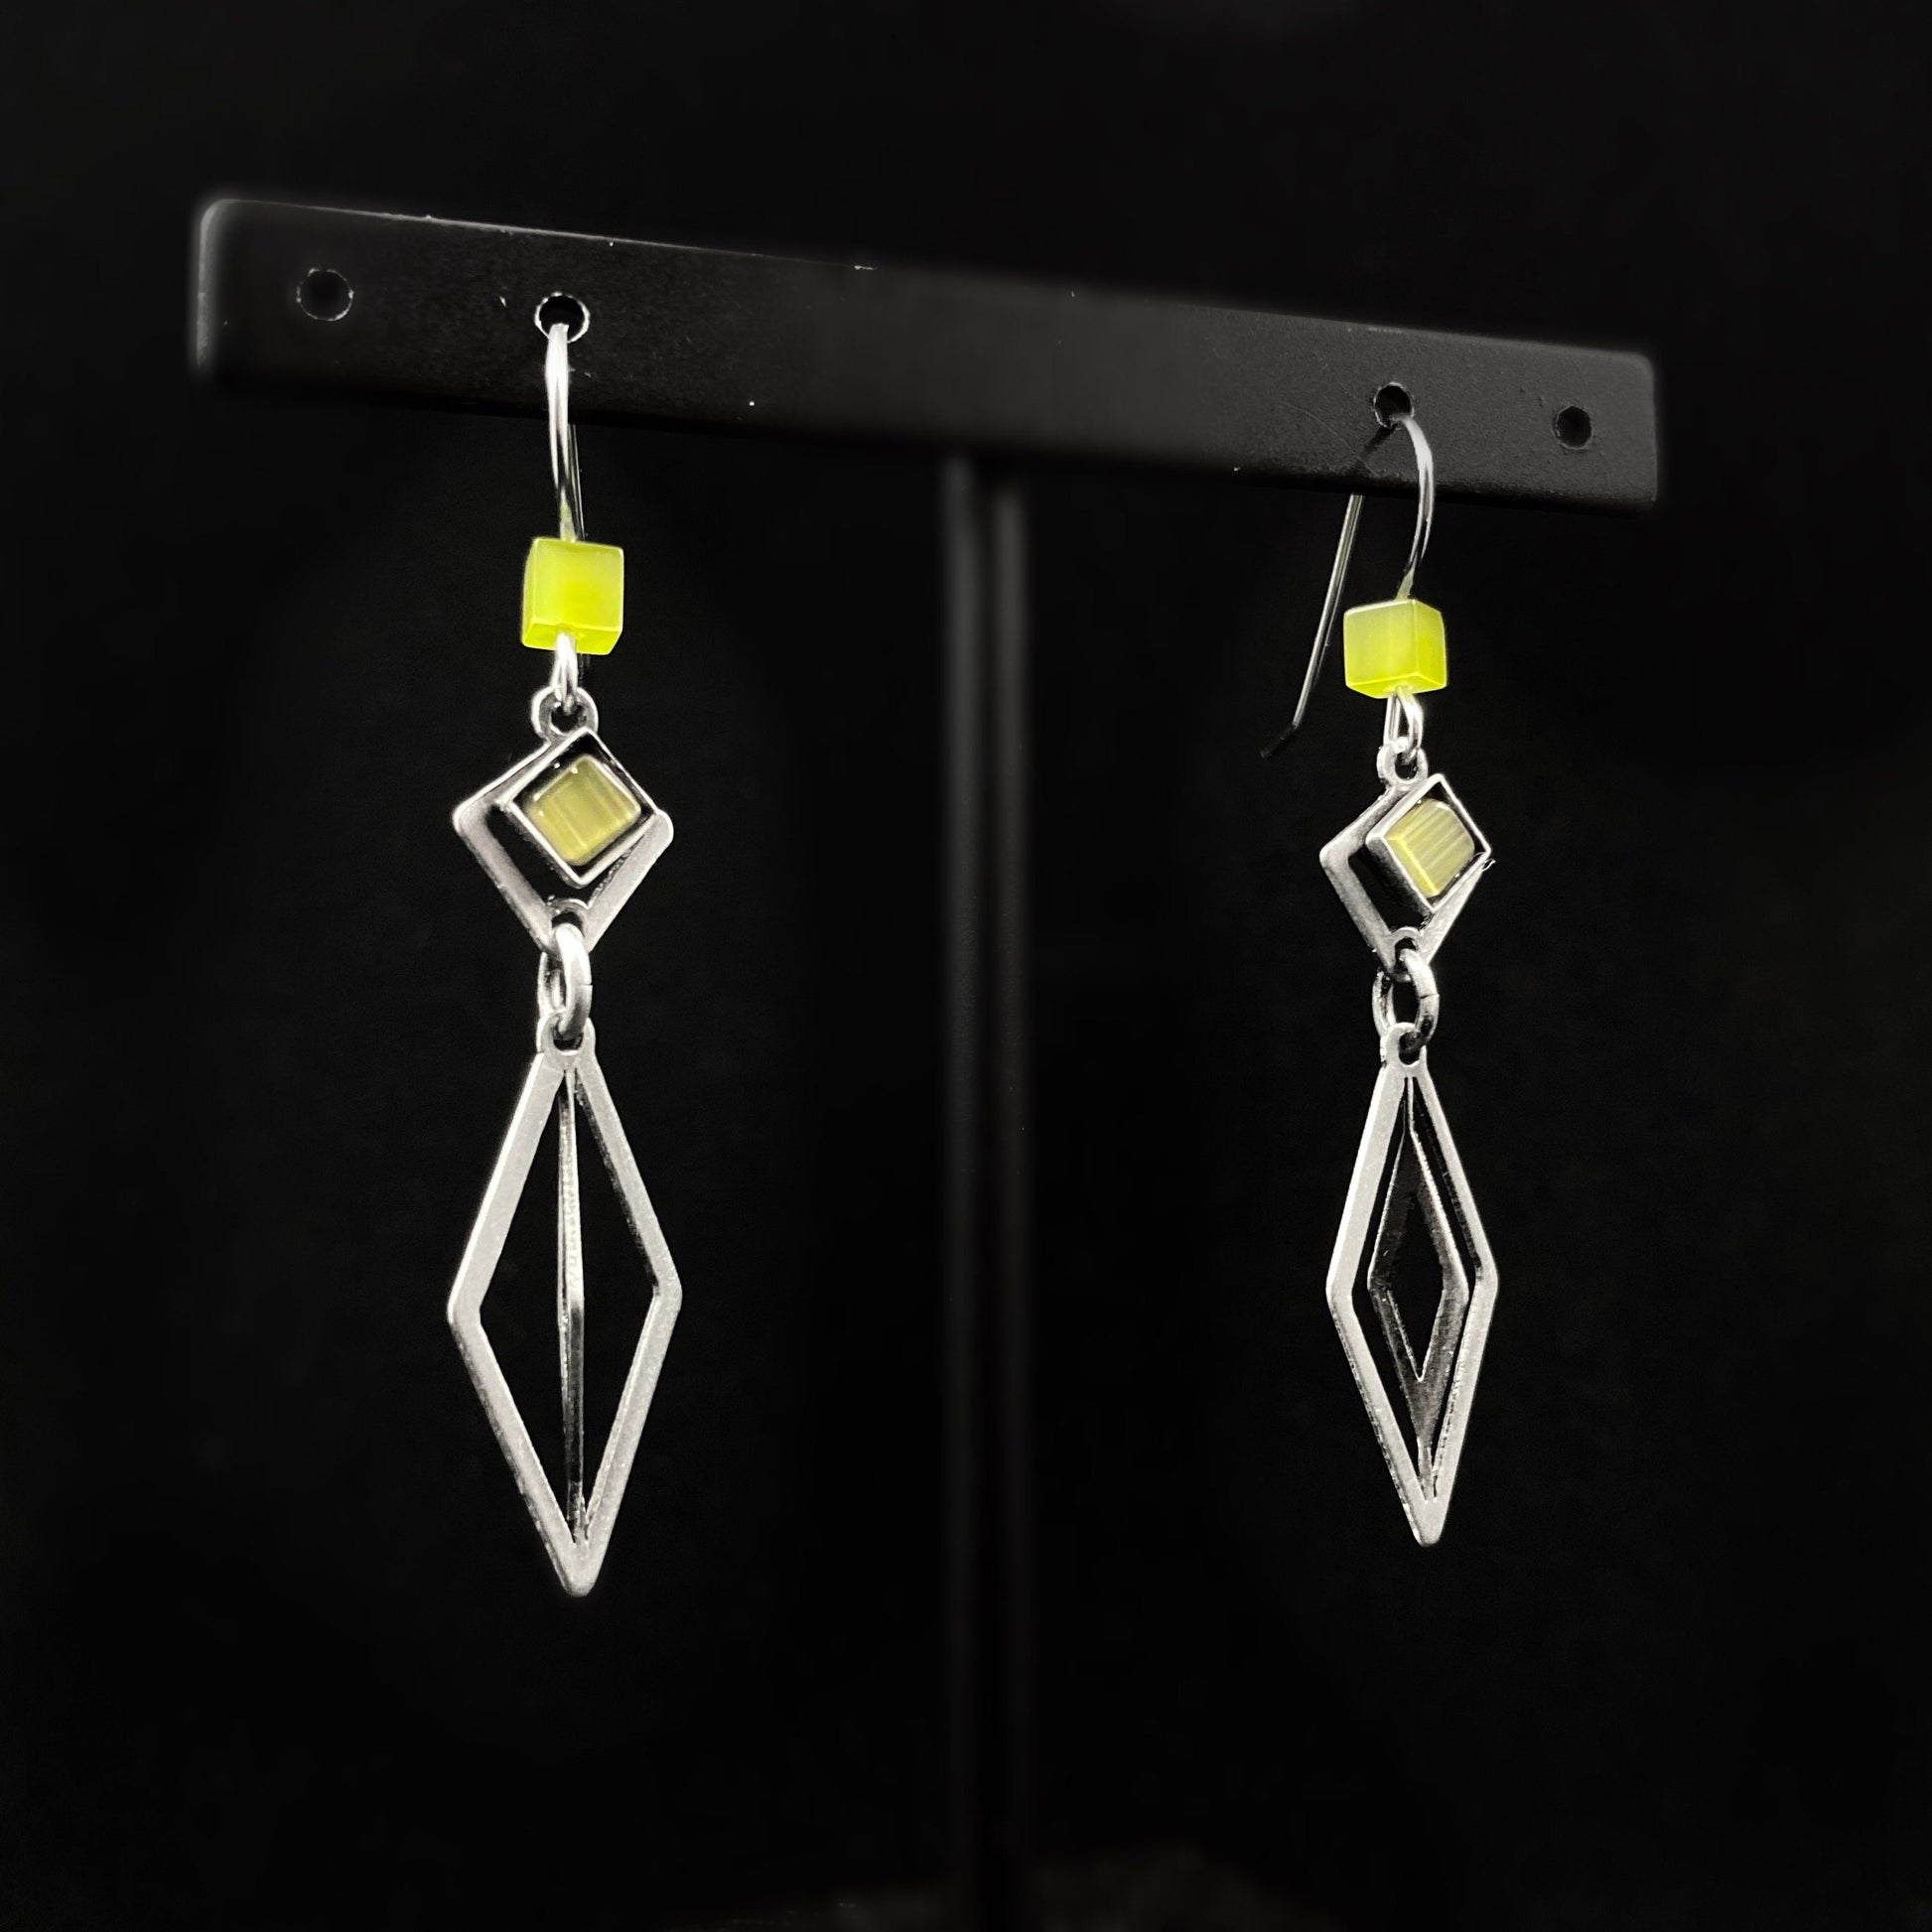 Lightweight Handmade Geometric Aluminum Earrings, Green Diamond